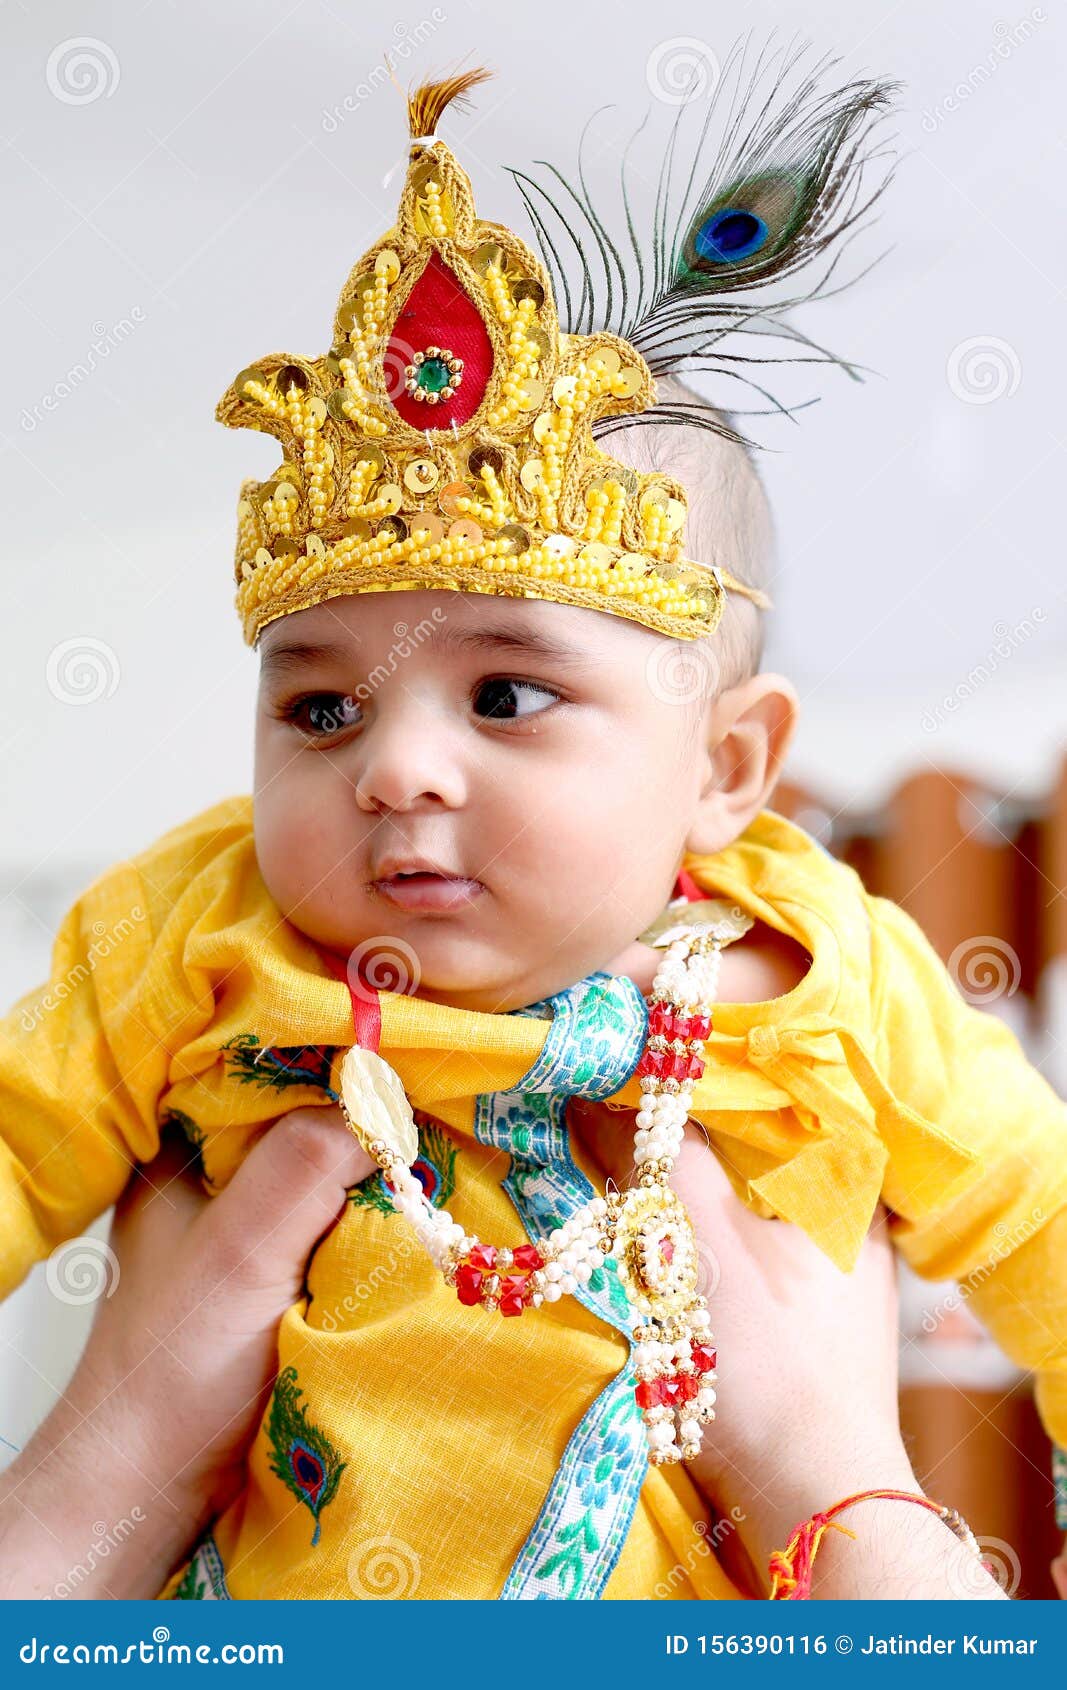 Picture of Baby krishna. stock photo. Image of bhagavan - 156390116